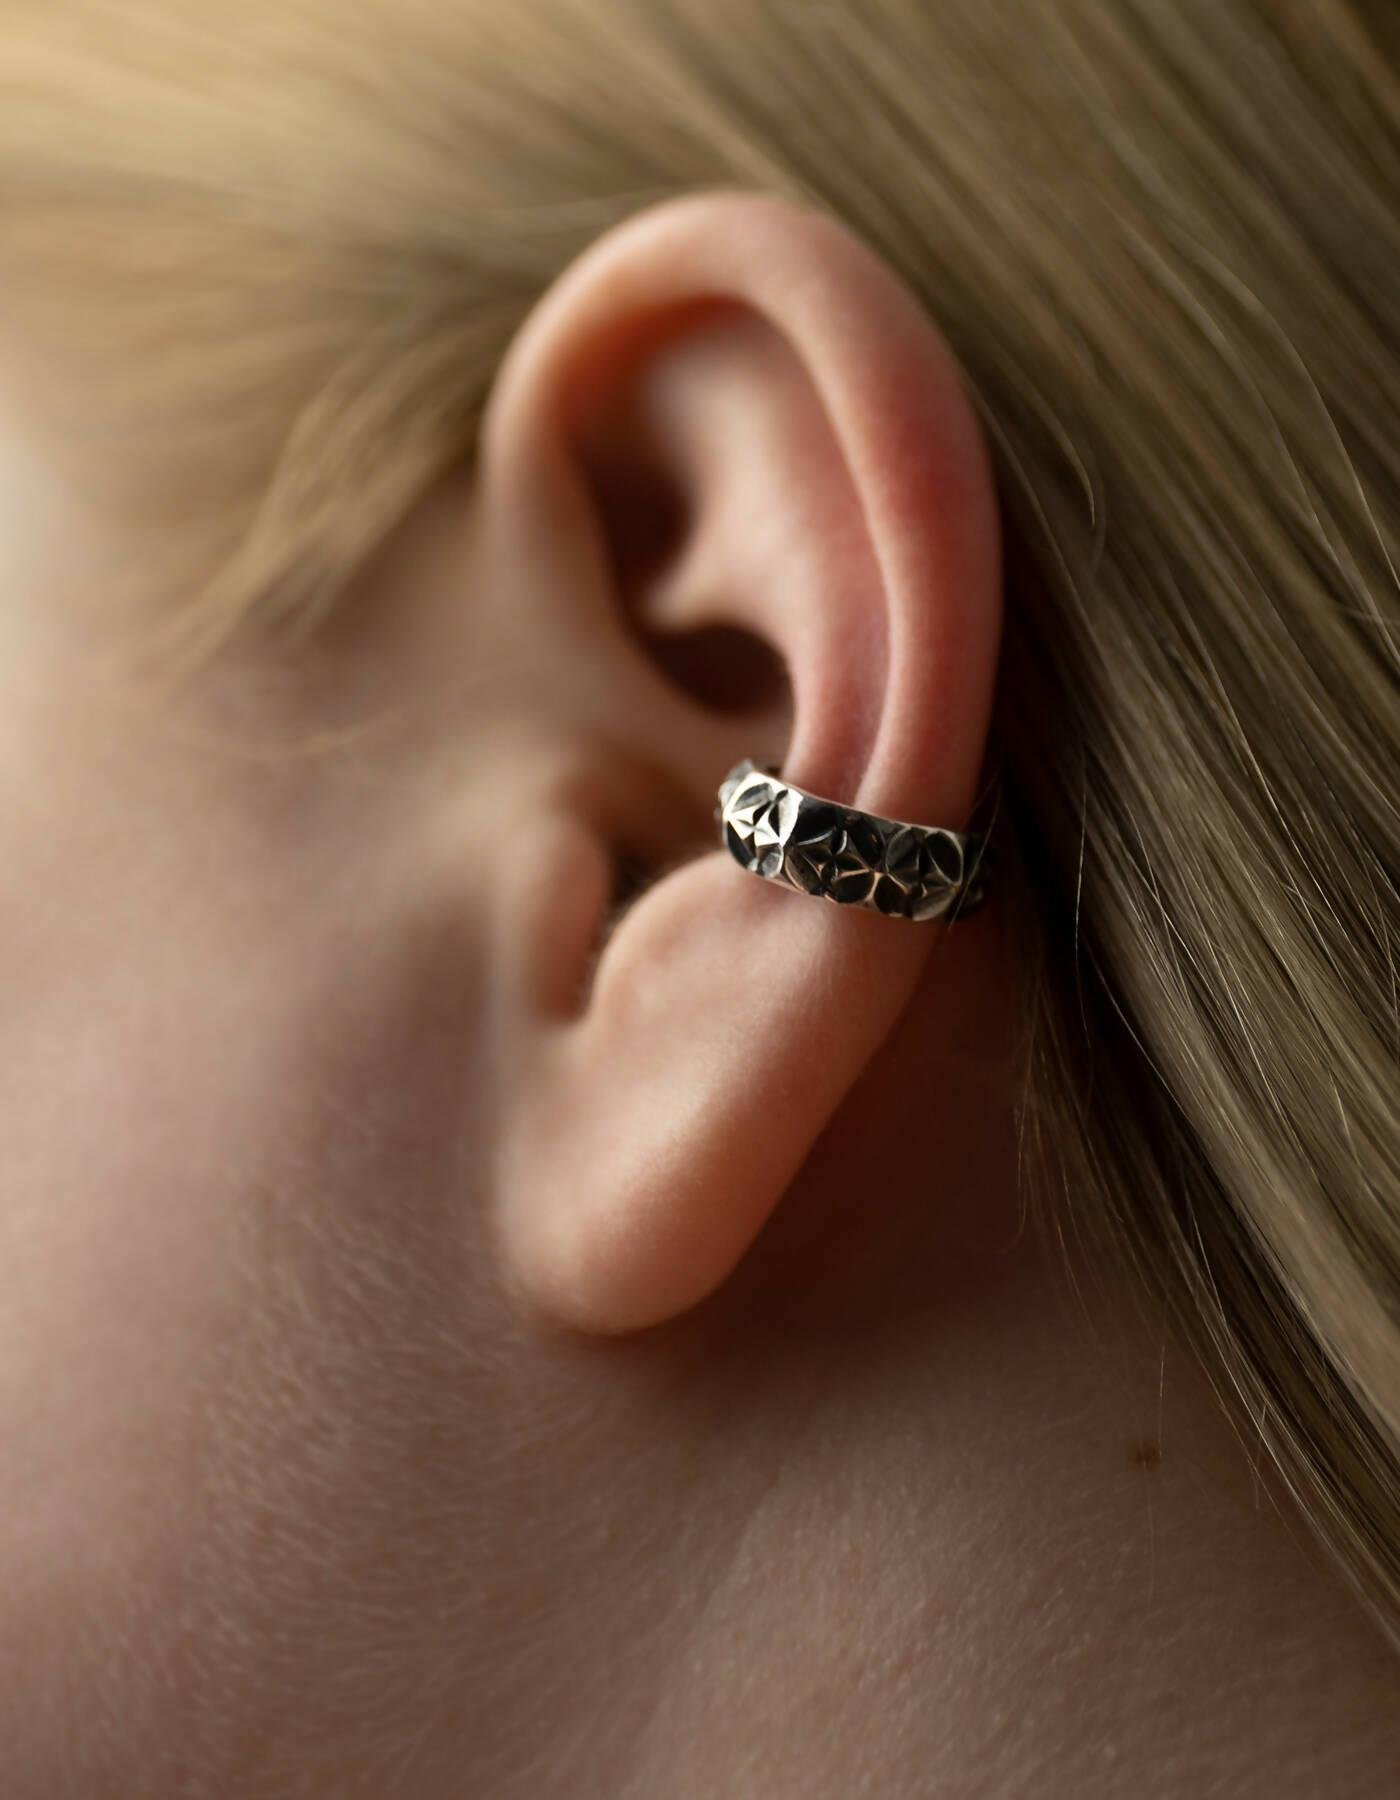 DRAGONFLY EAR CUFF by MACABRE GADGETS